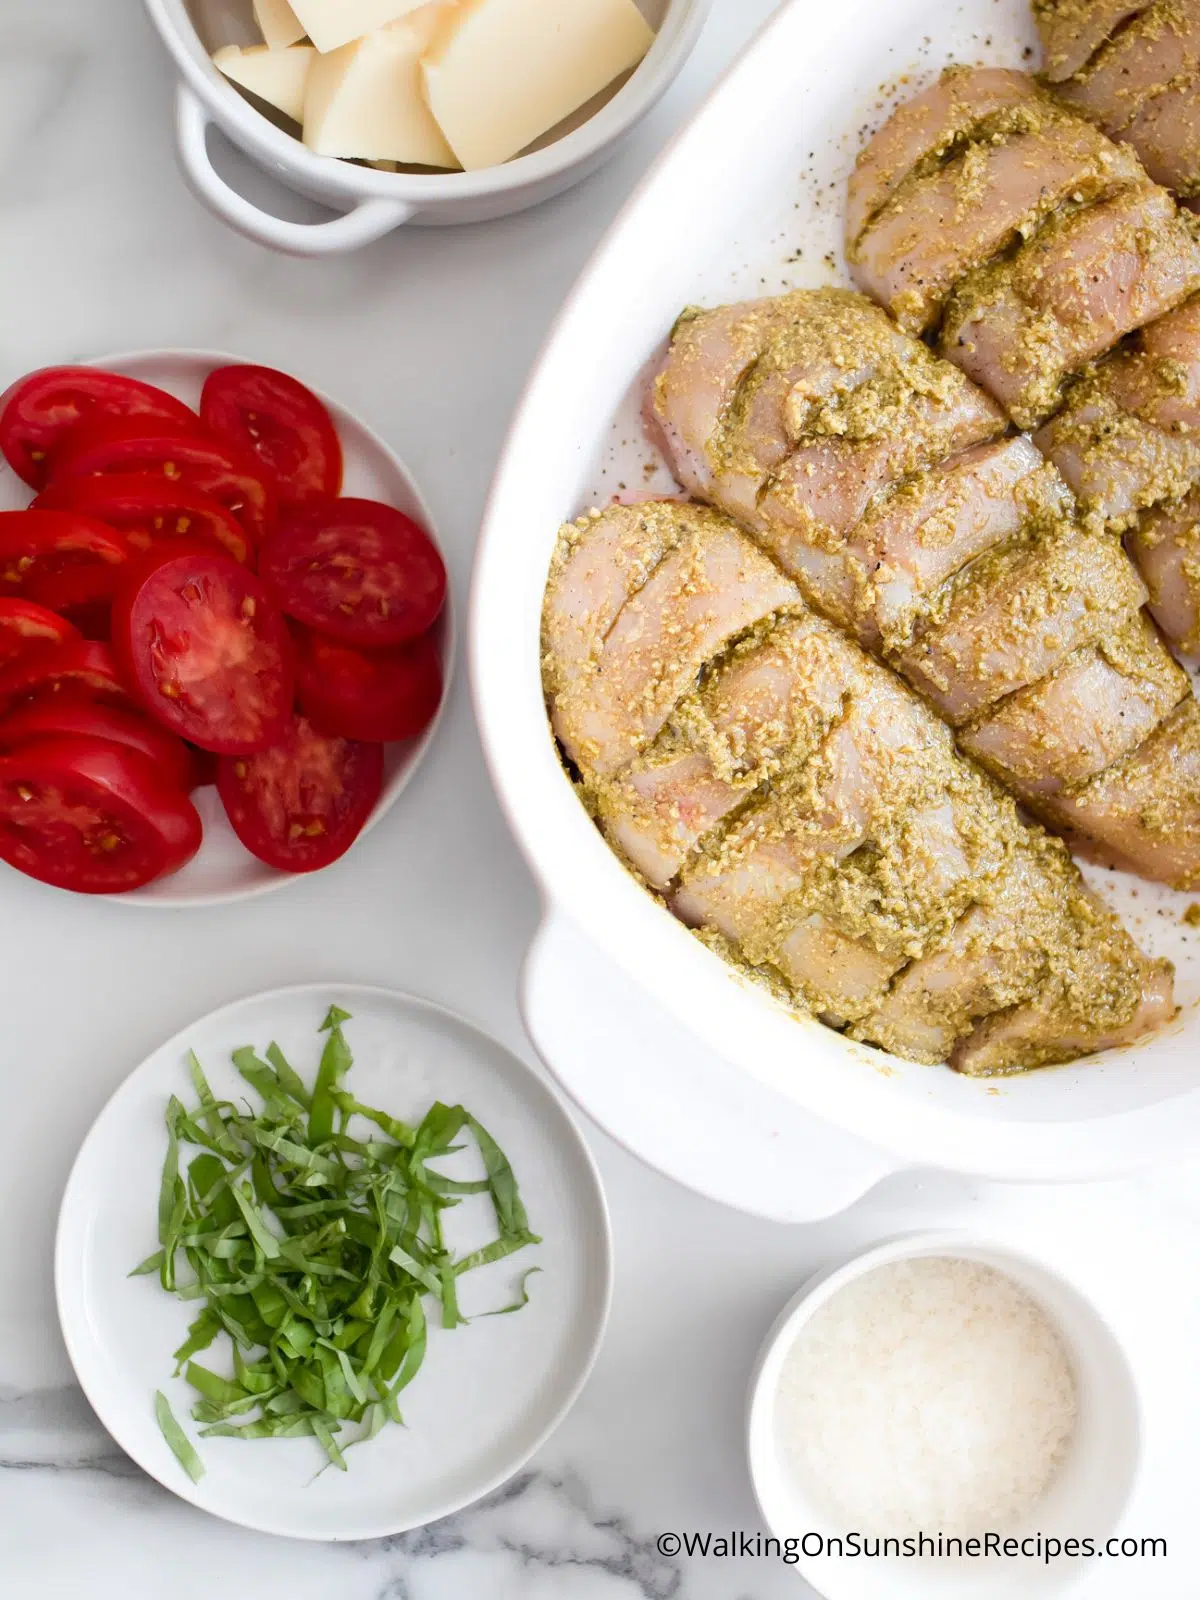 Chicken with basil pesto sauce in casserole dish.